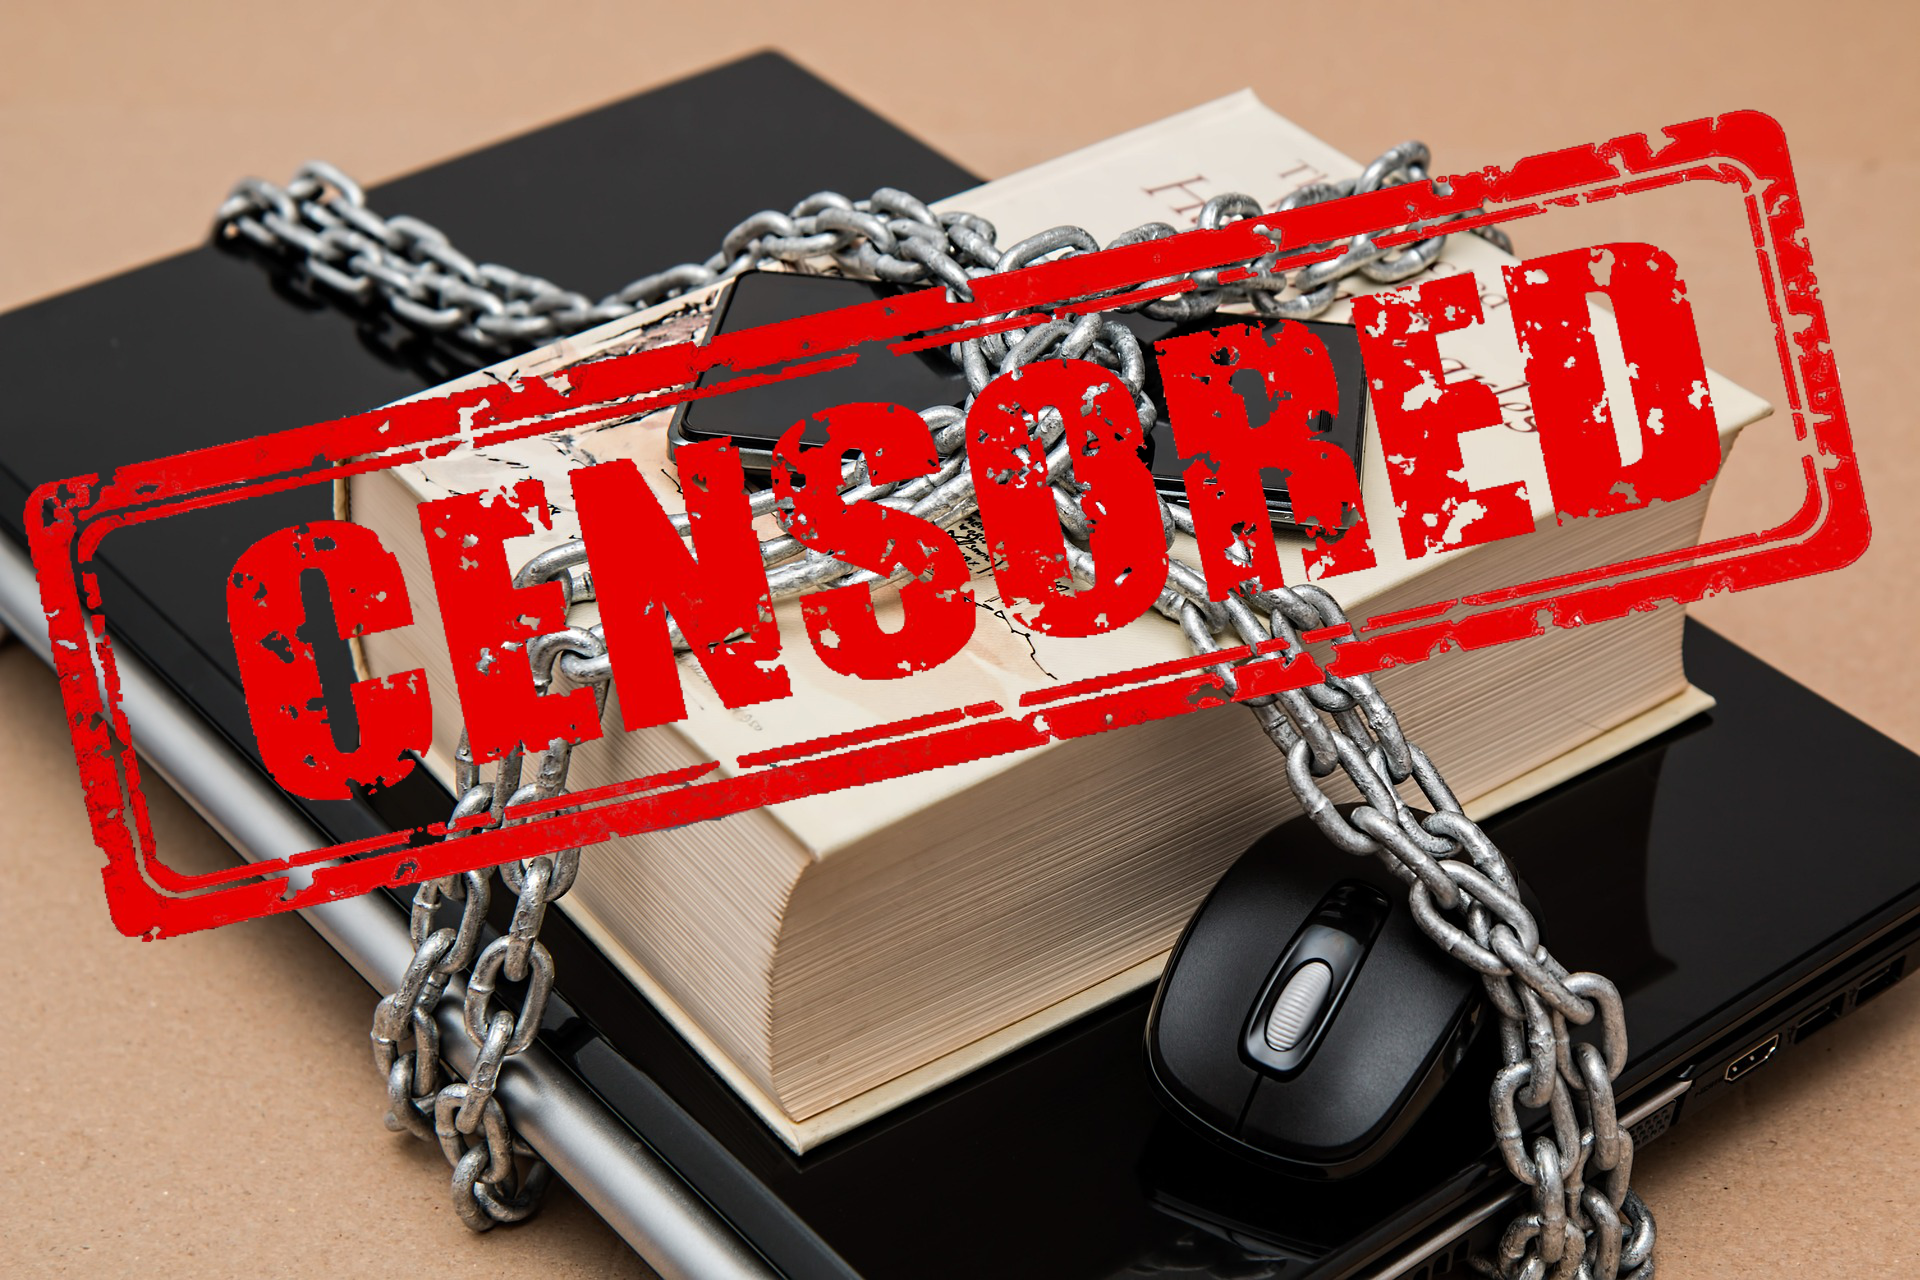 GB Unite debate: Do we have censorship in the UK or not?